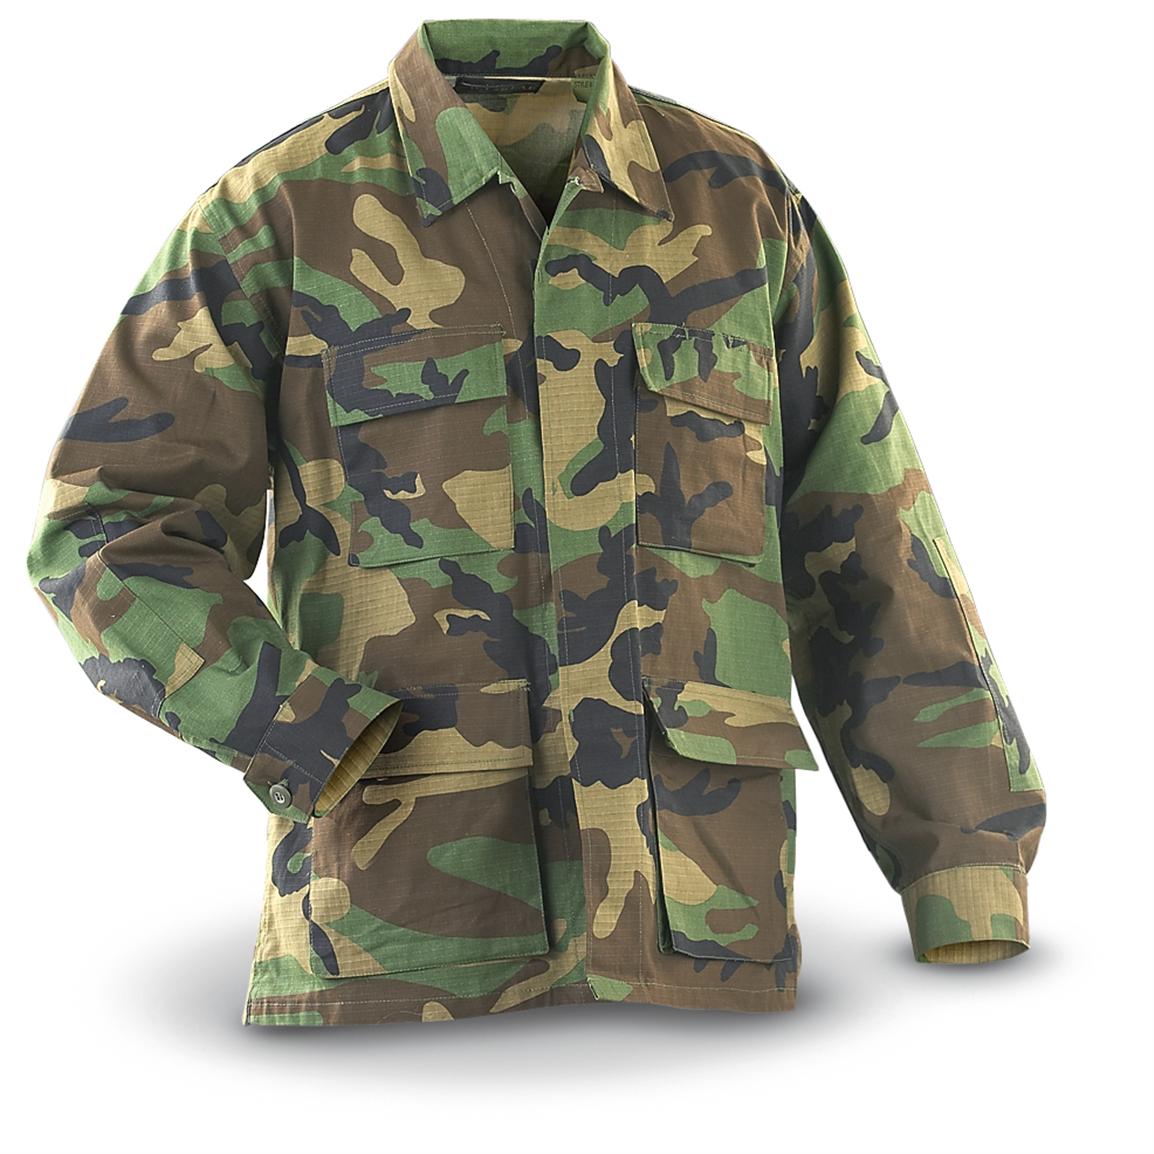 2 Regular Ripstop Camo Jackets 174337, Tactical Clothing at Sportsman